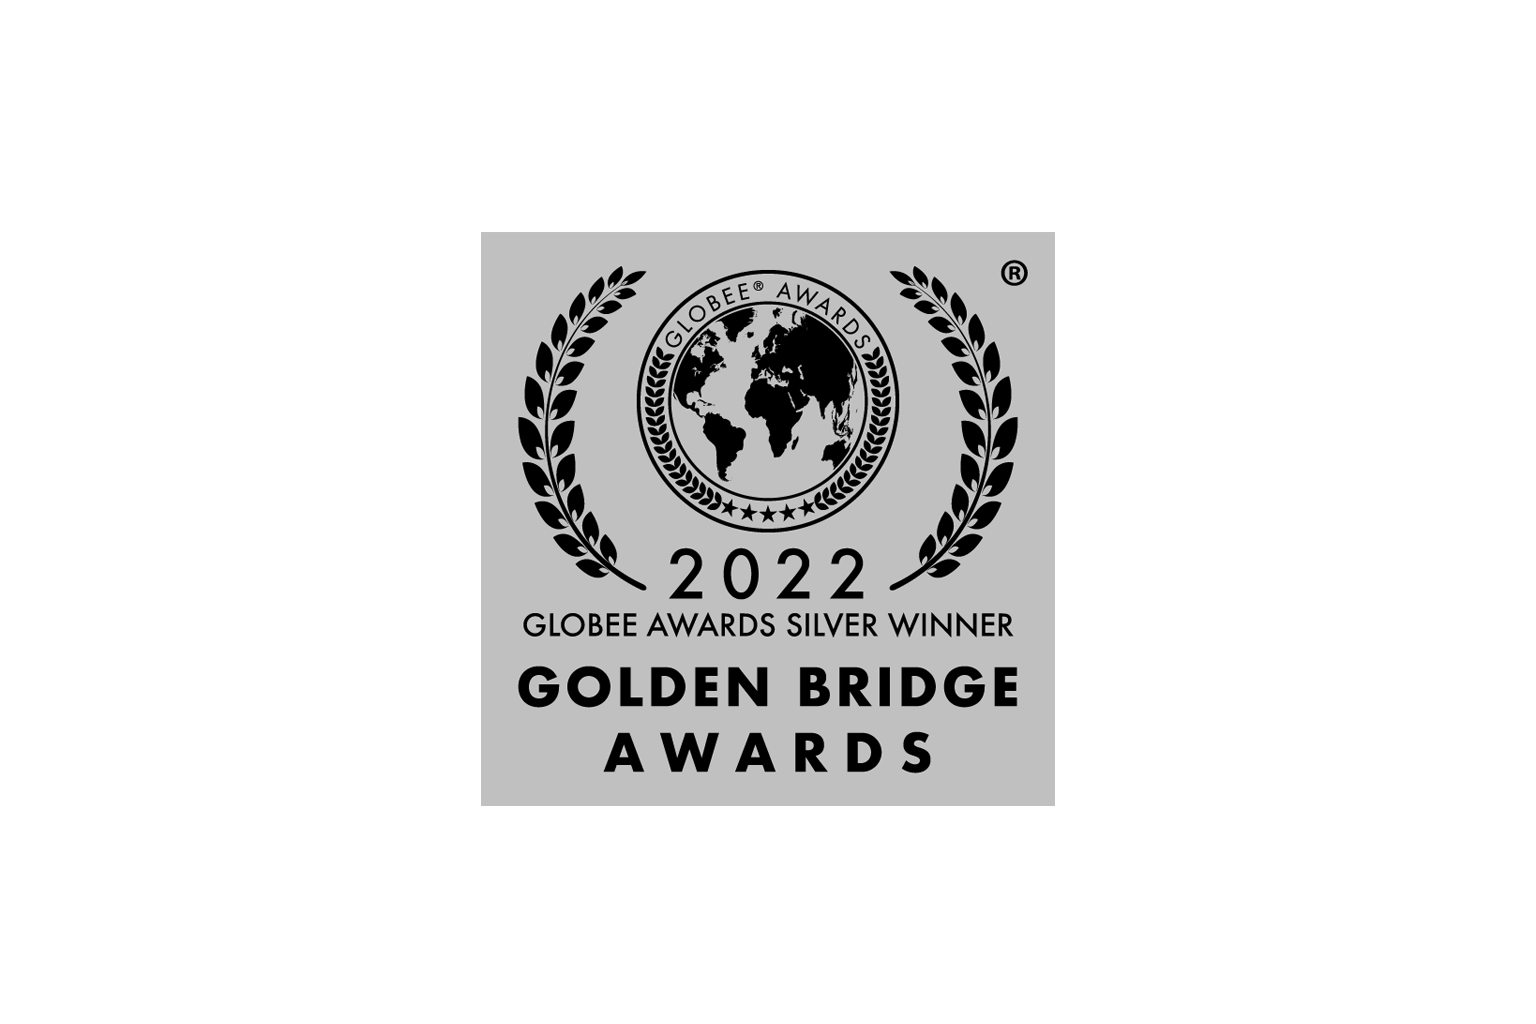 Golden Bridge Awards - 2022 Globee Awards Silver WInner